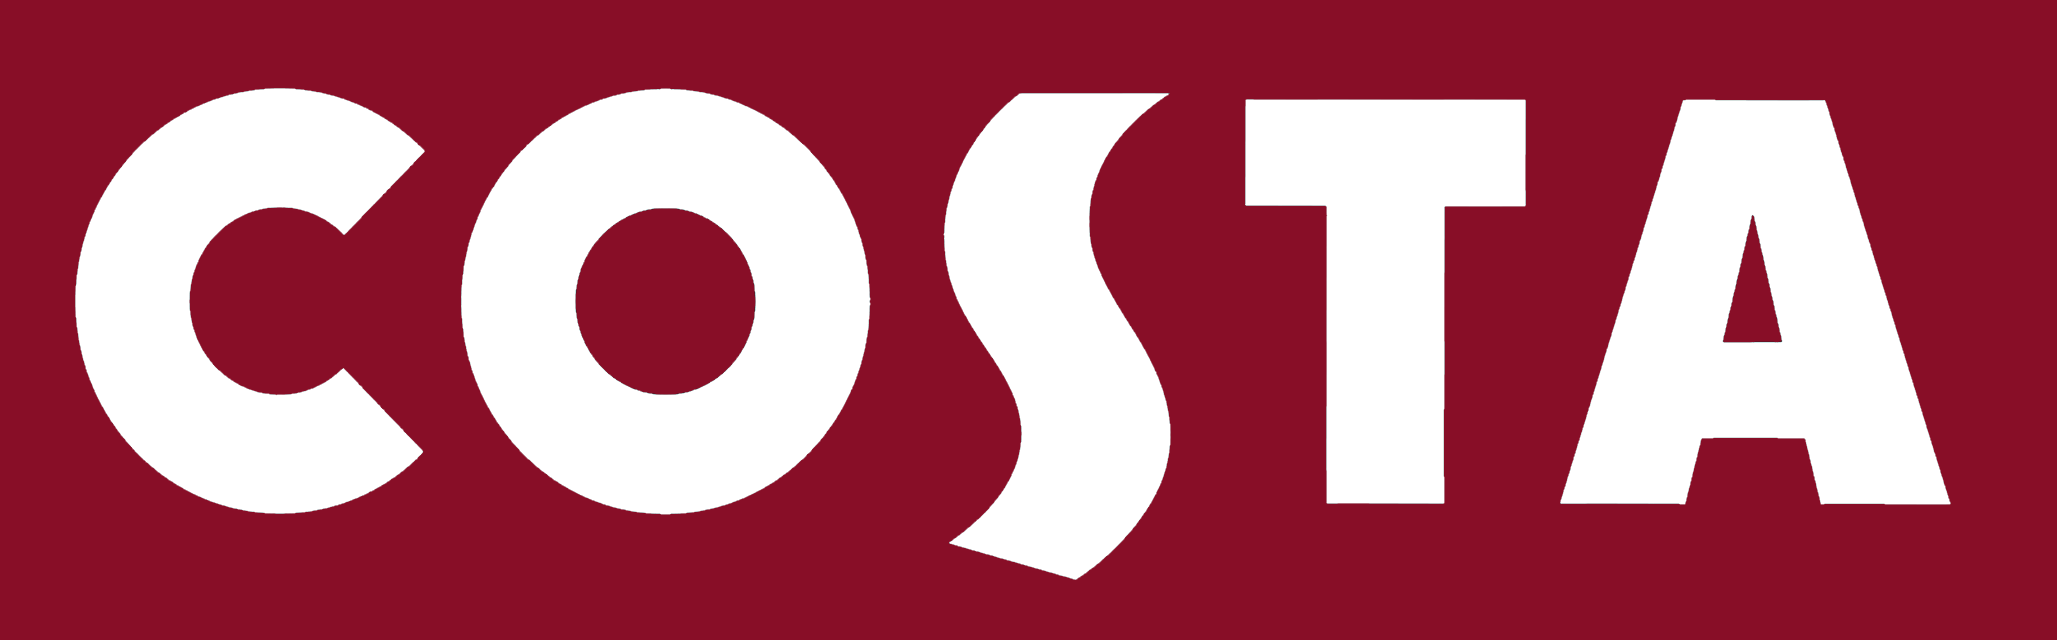 Costa Logo - Costa Coffee